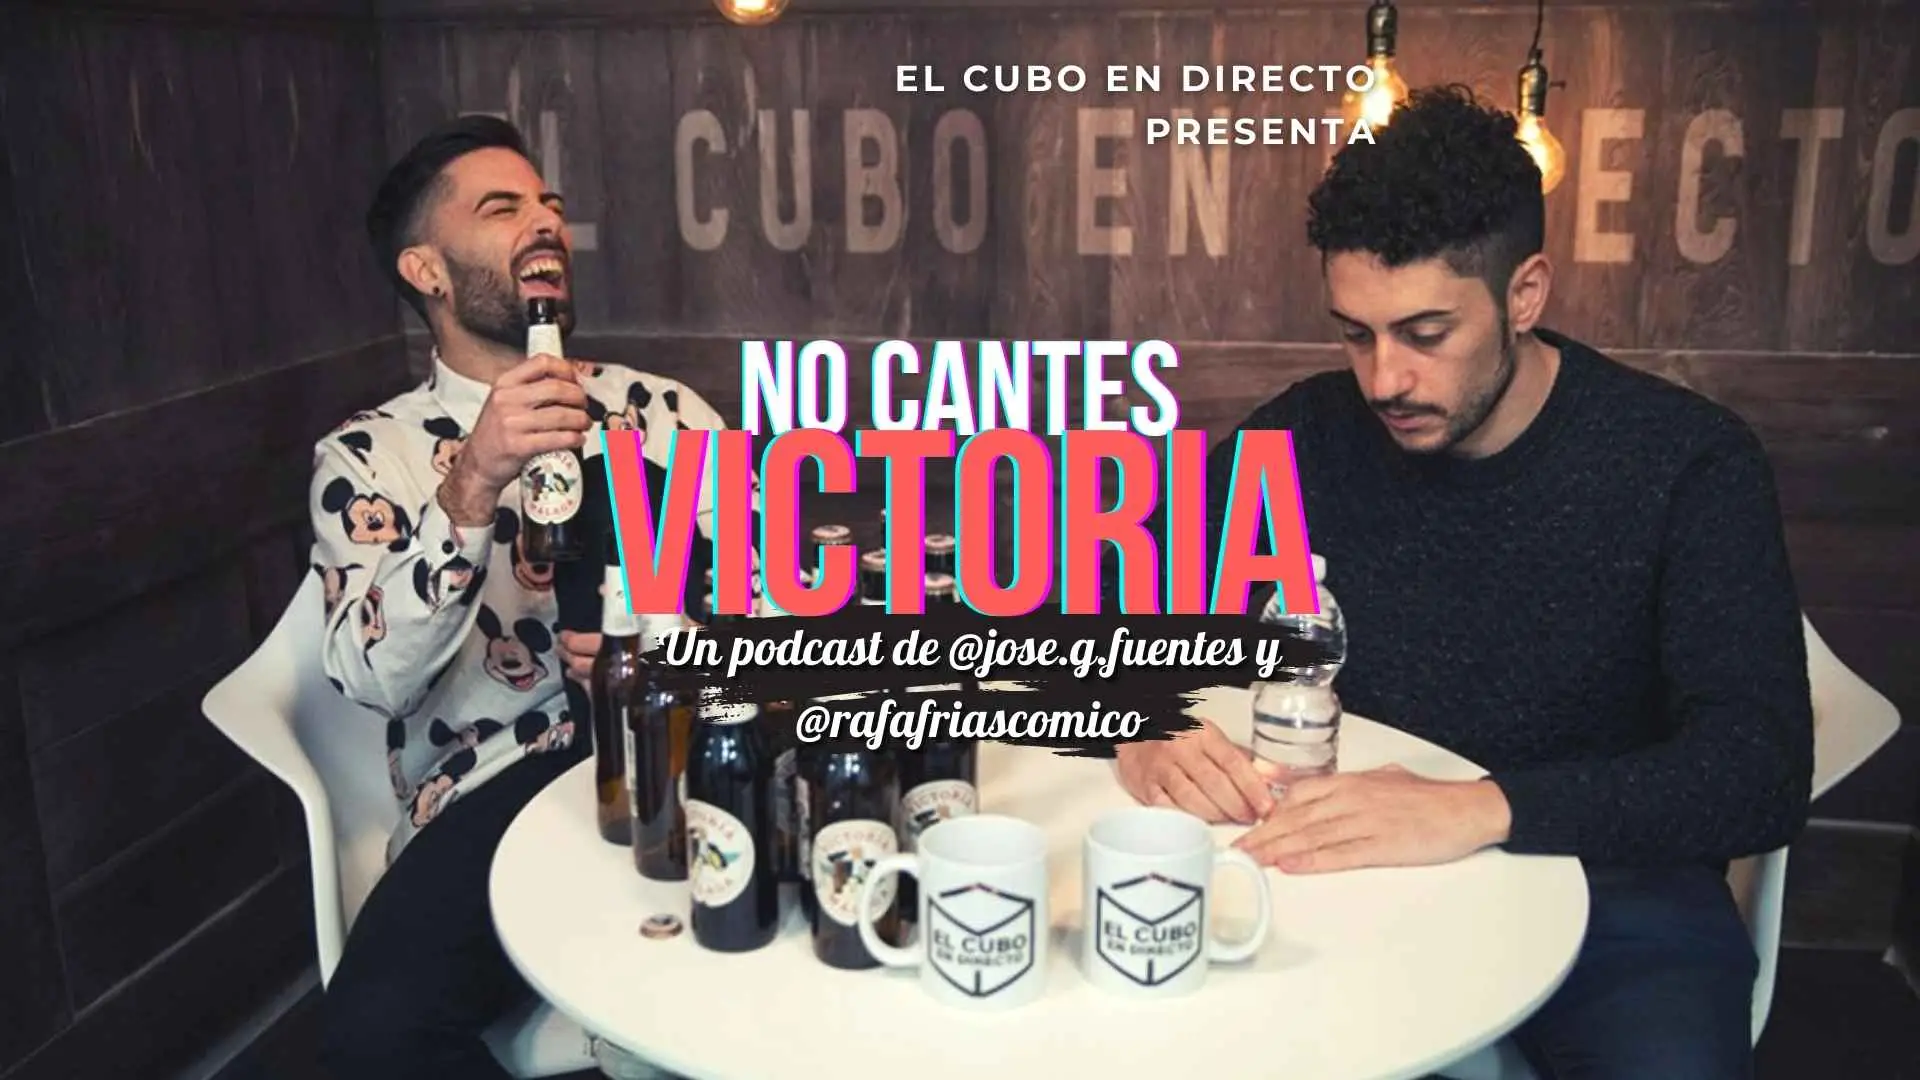 No cantes Victoria, un podcast de humor en Málaga